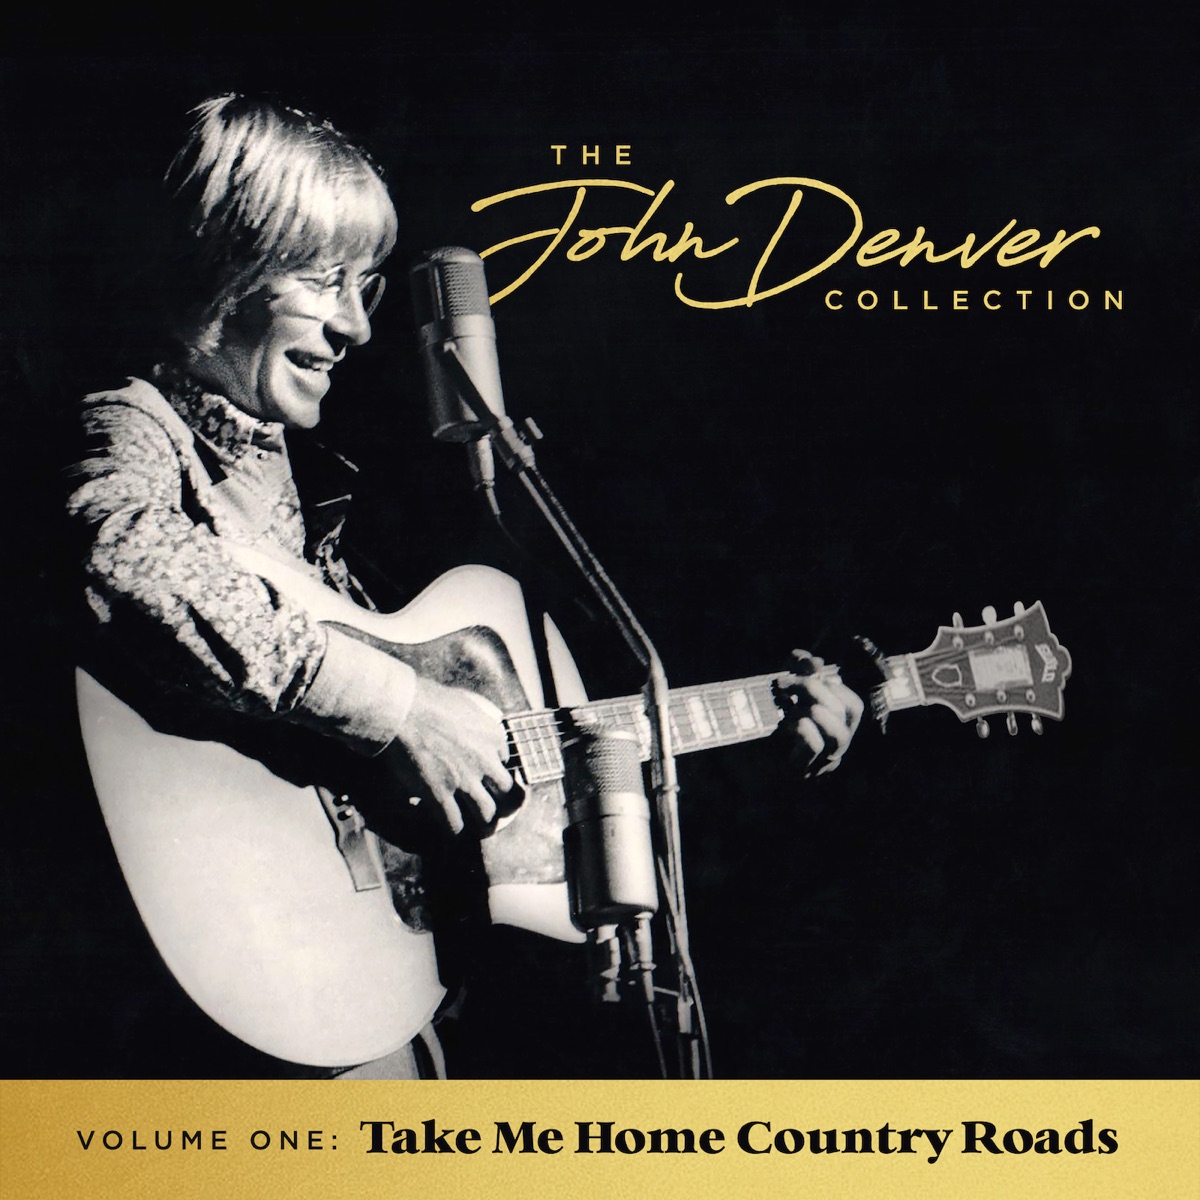 John Denver The John Denver Collection, Vol 1: Take Me Home Country Roads cover artwork